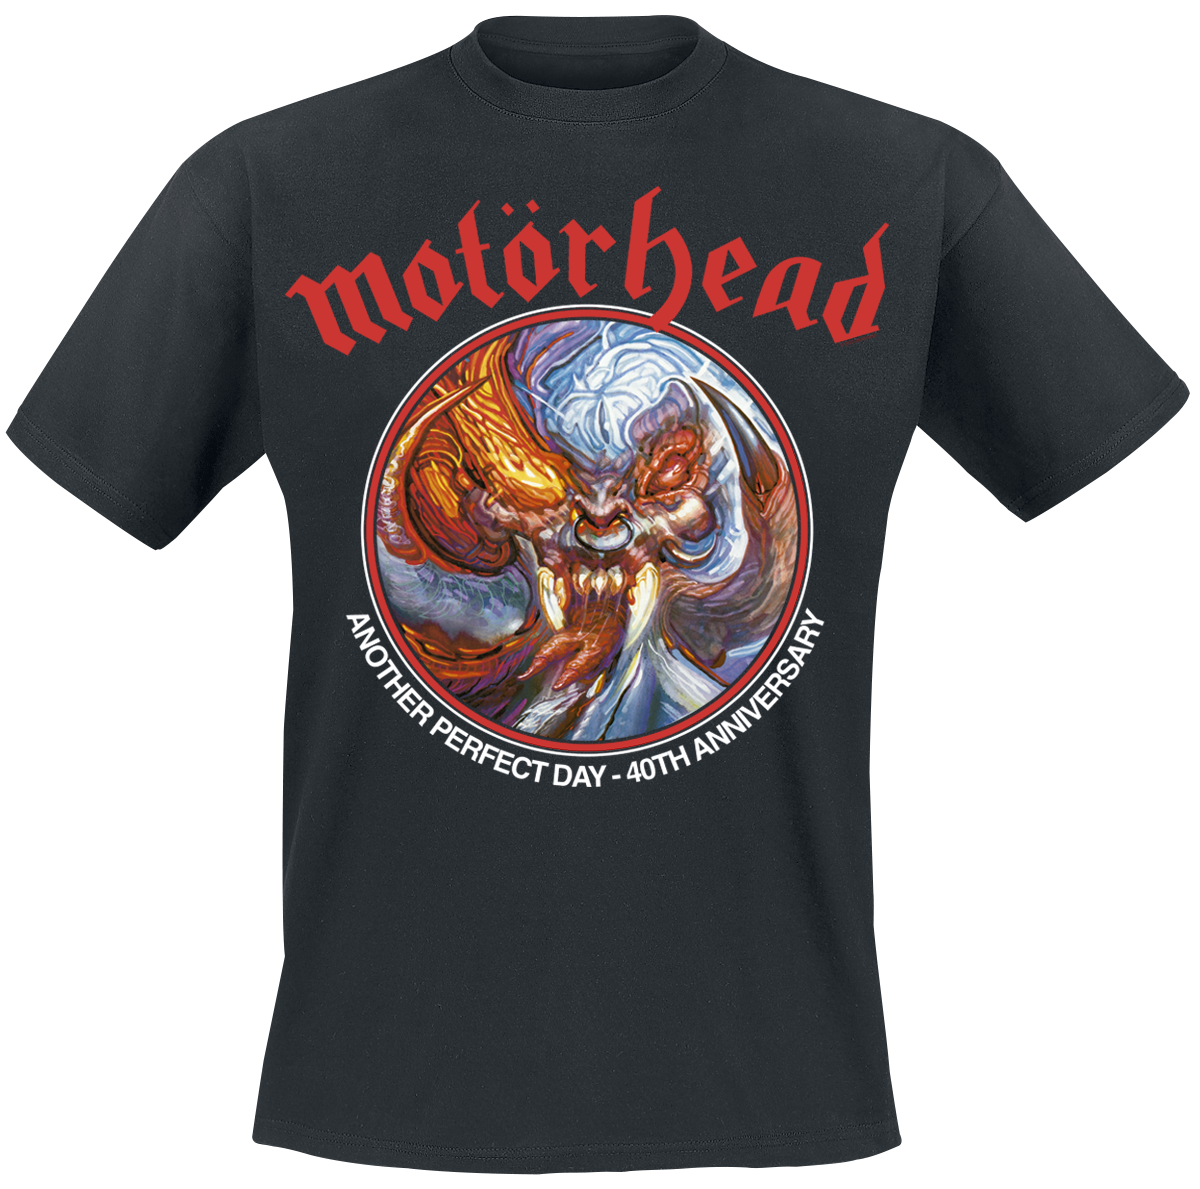 Motörhead - Another Perfect Day Anniversary - T-Shirt - schwarz